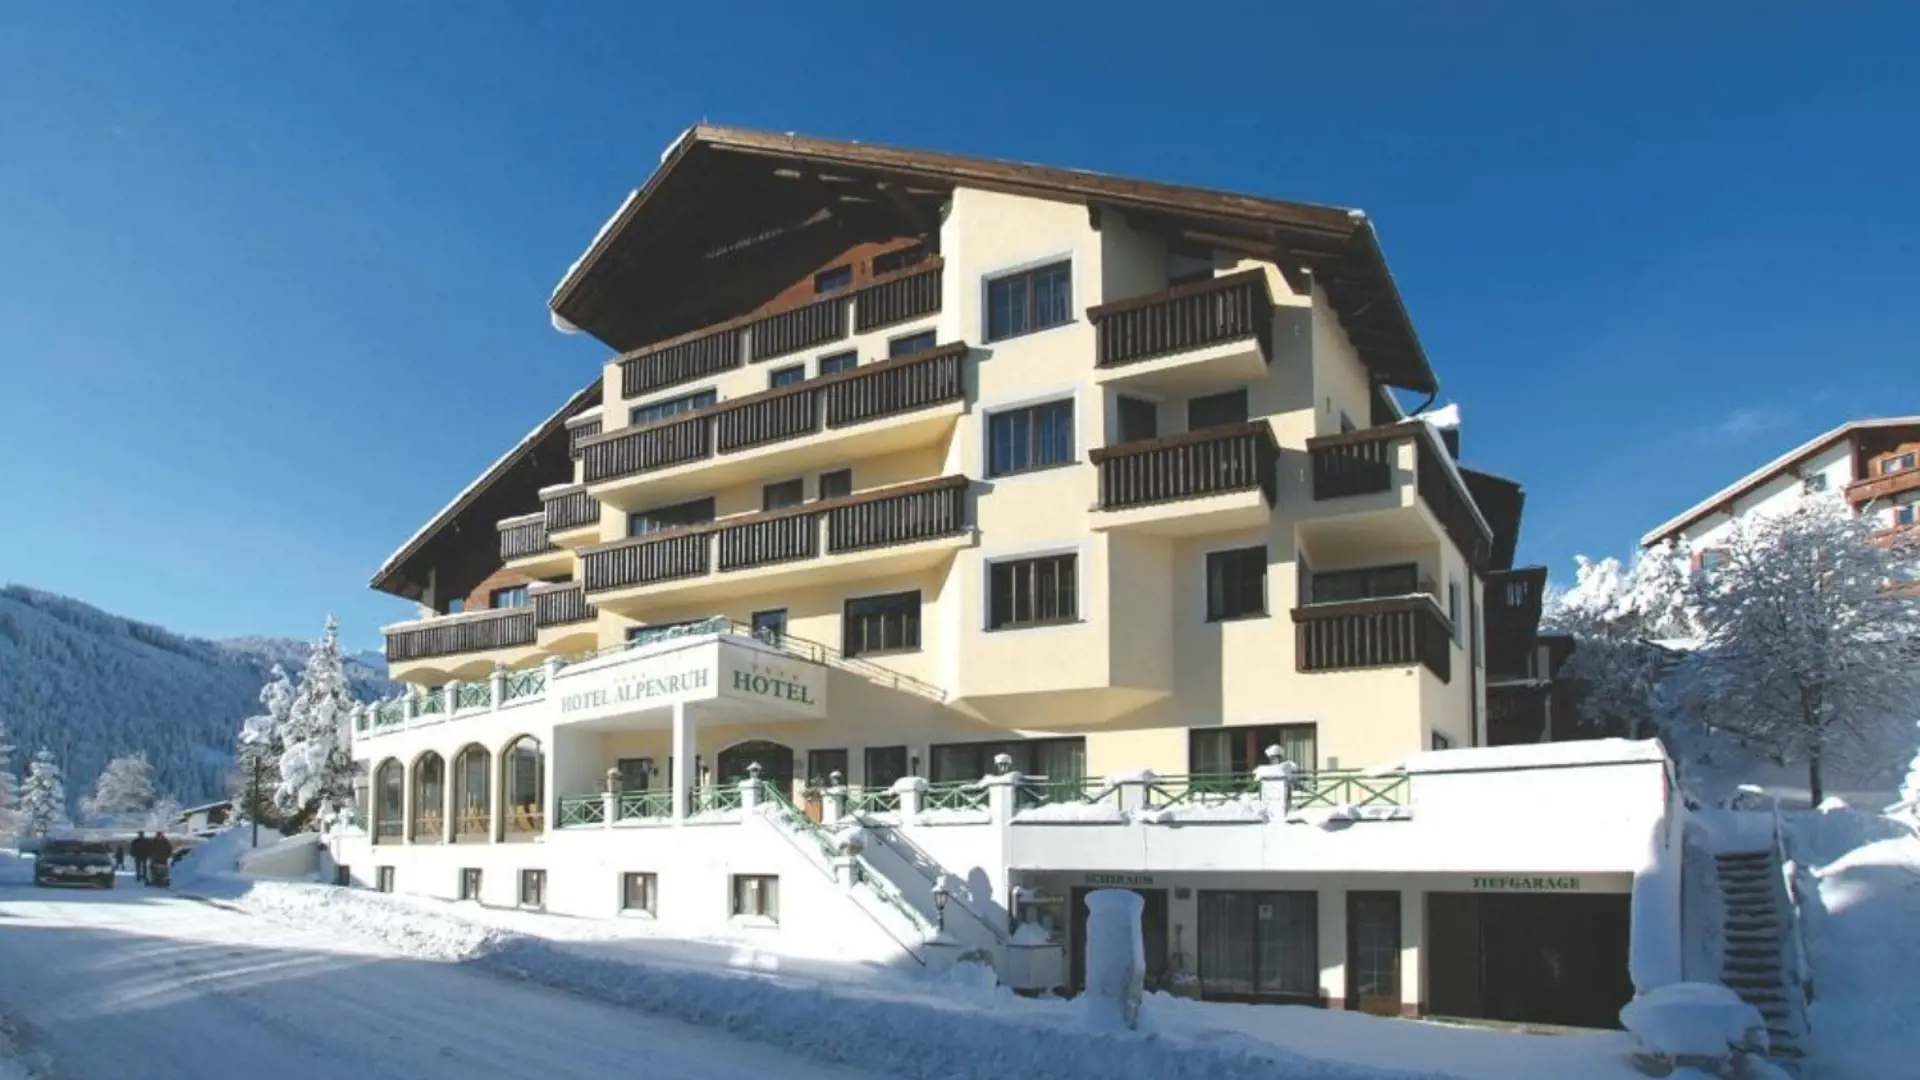 Hotel Alpenruh, Serfaus